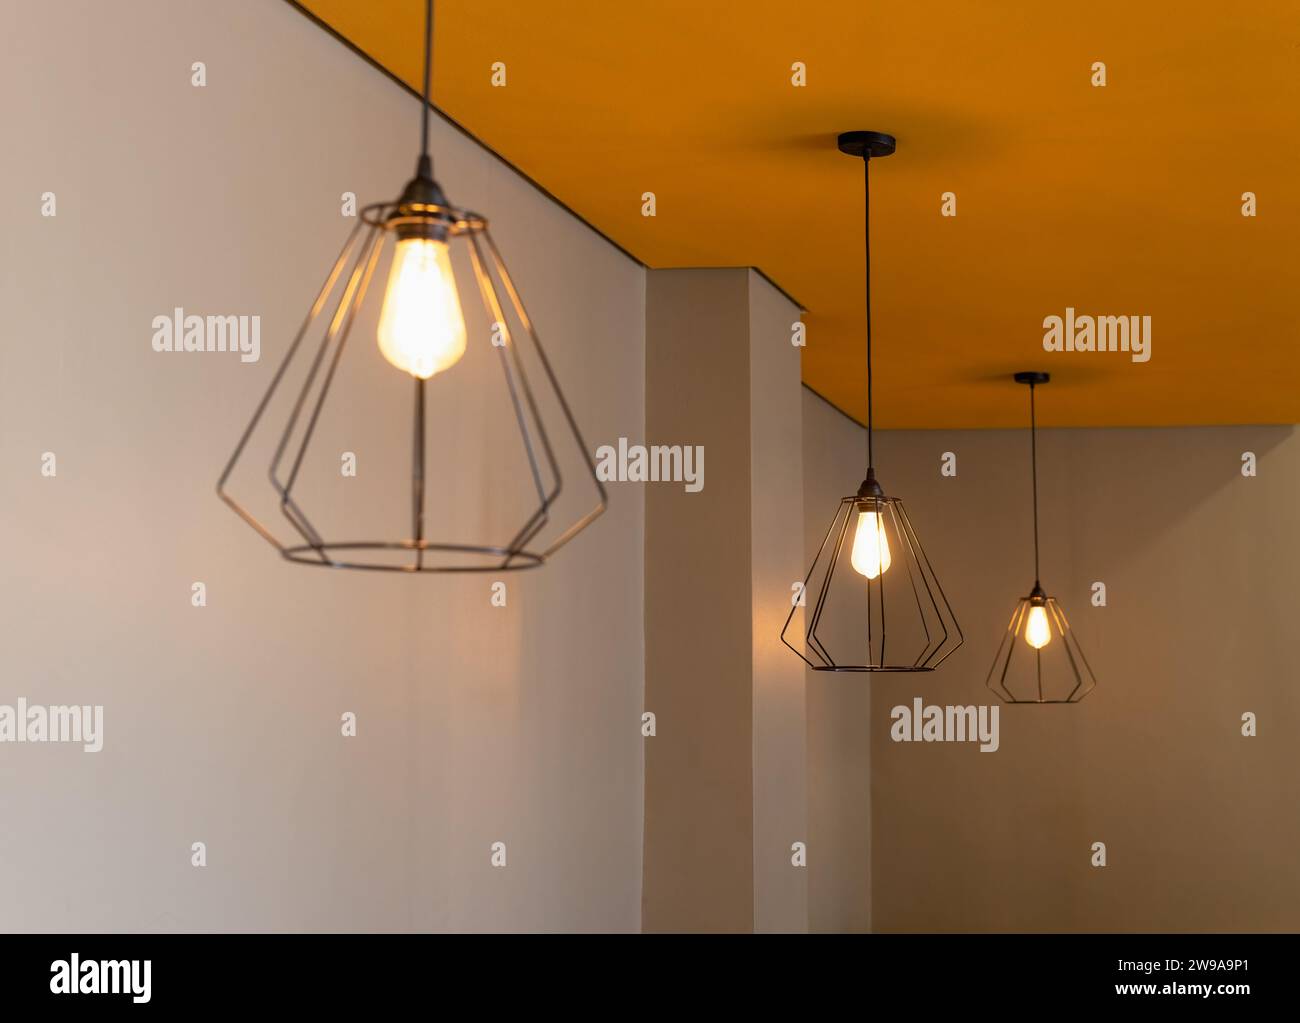 designer lights, illumination room orange, simple wire lamps Stock Photo